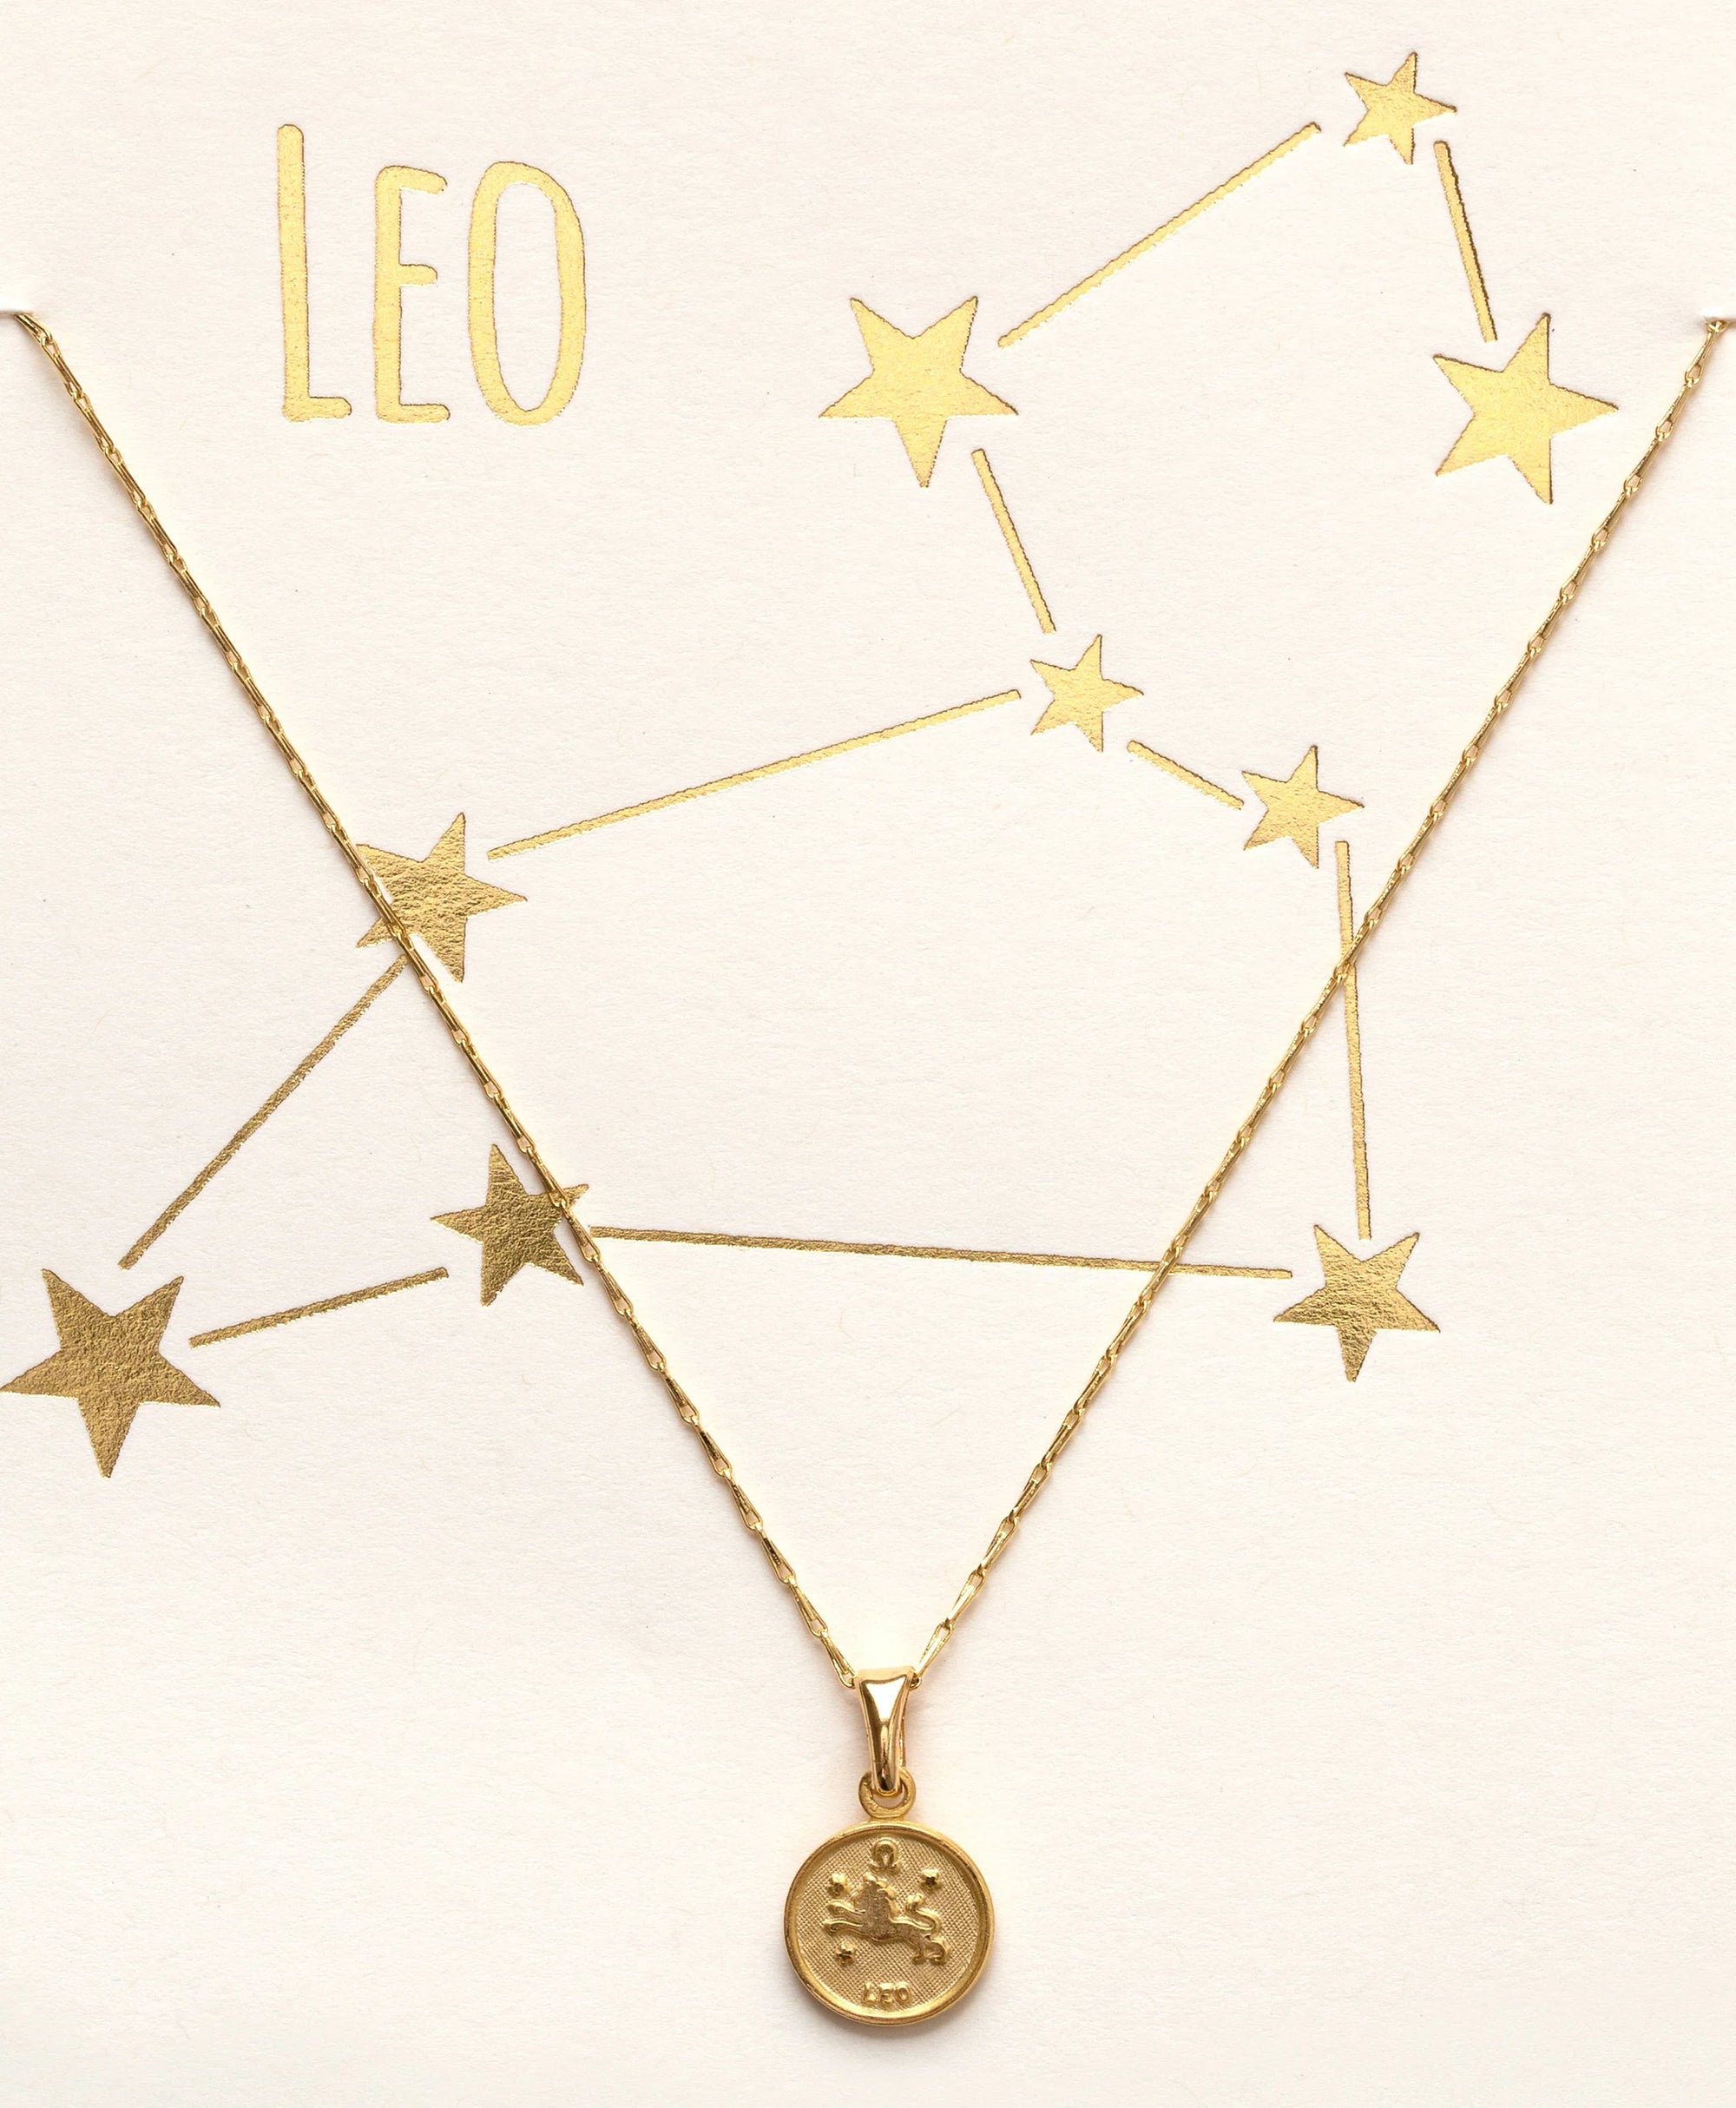 Tiny Zodiac Medallion Necklace